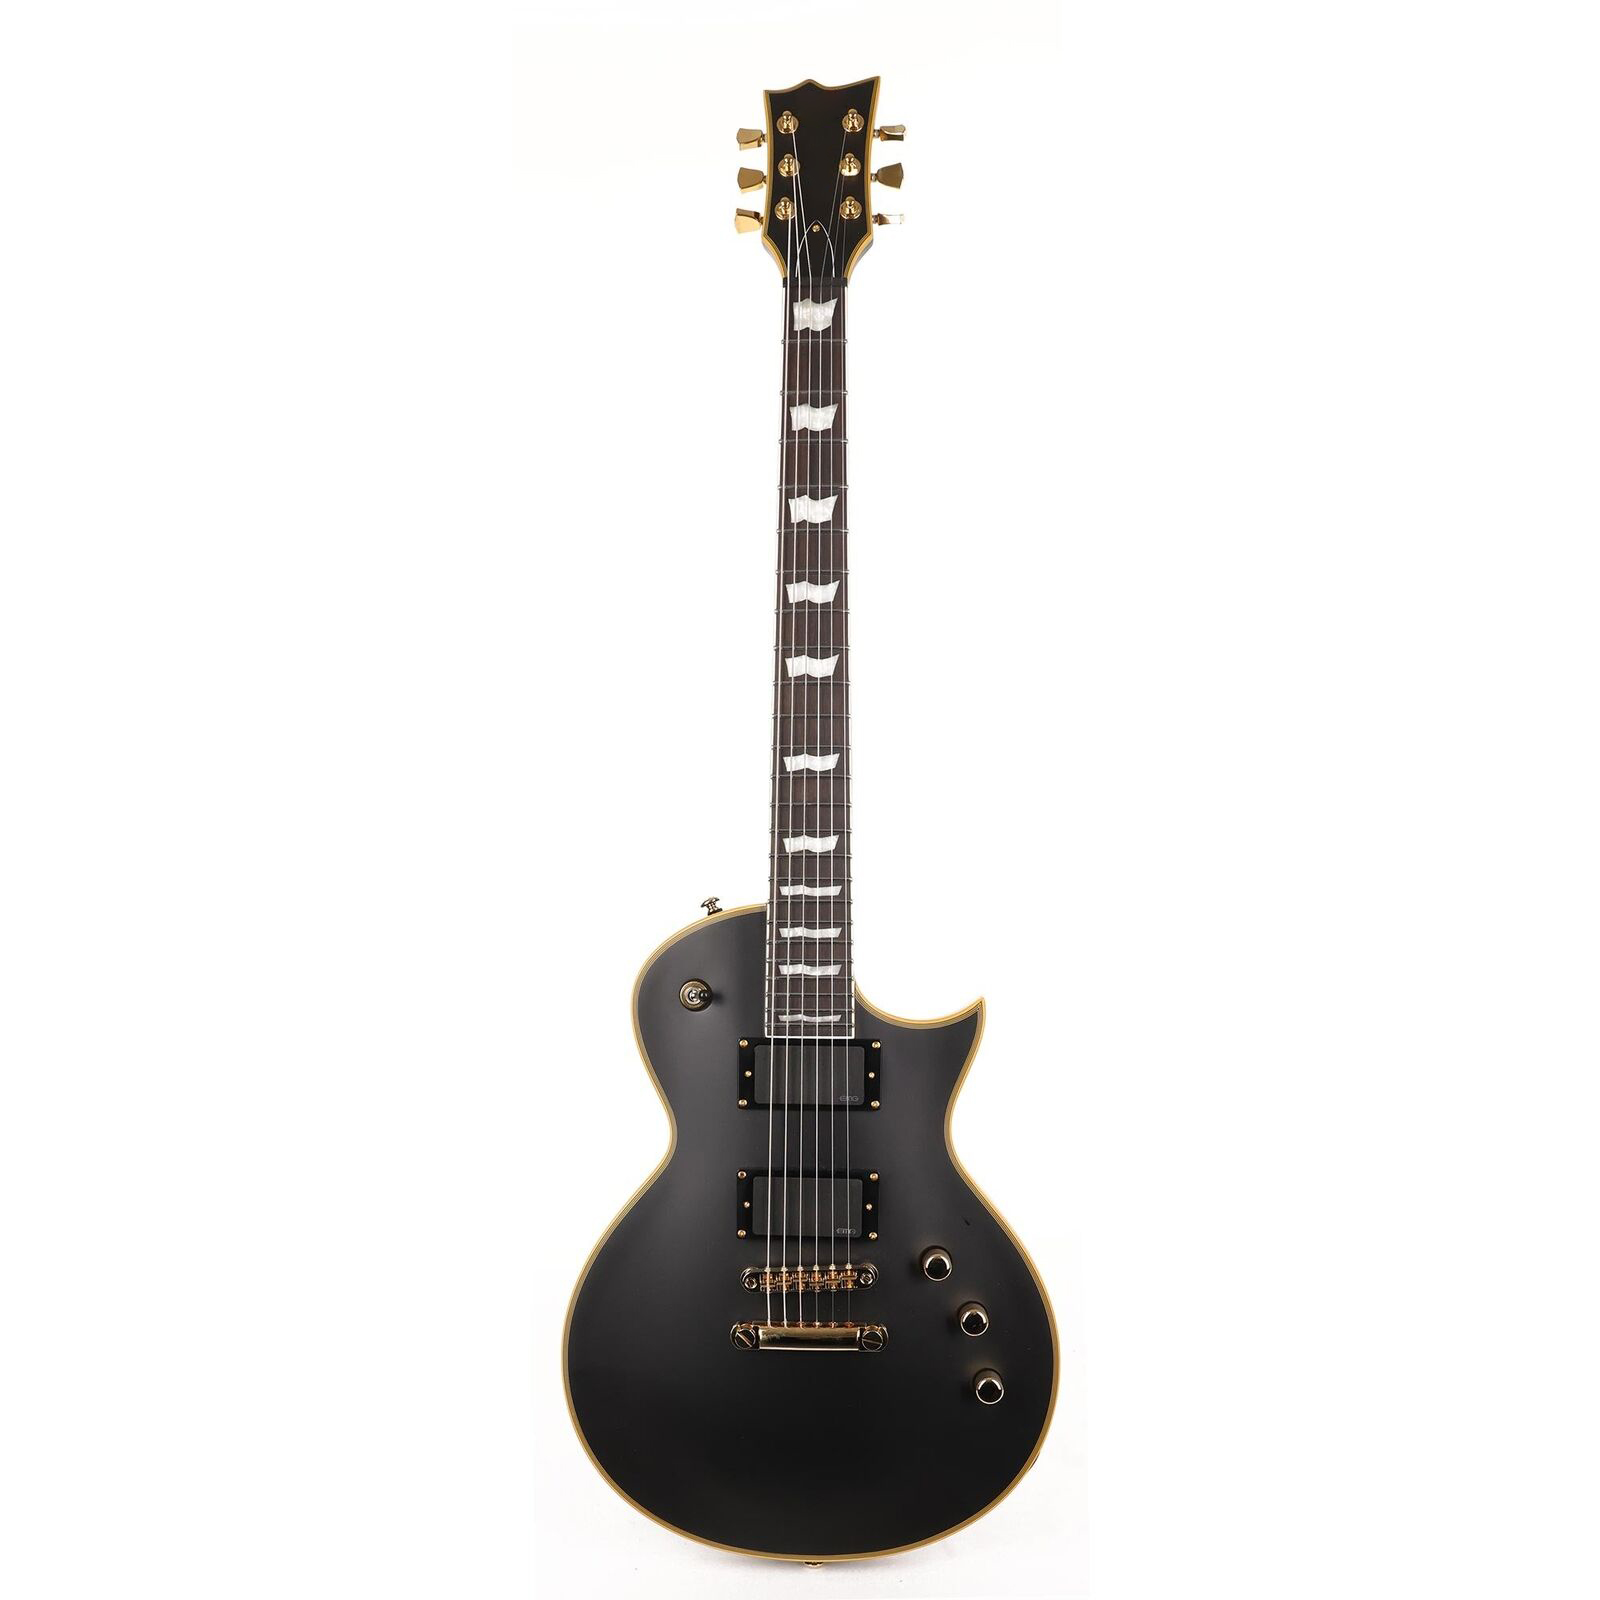 E S P LTD EC-1000 Vintage Black Electric Guitar da mesma forma